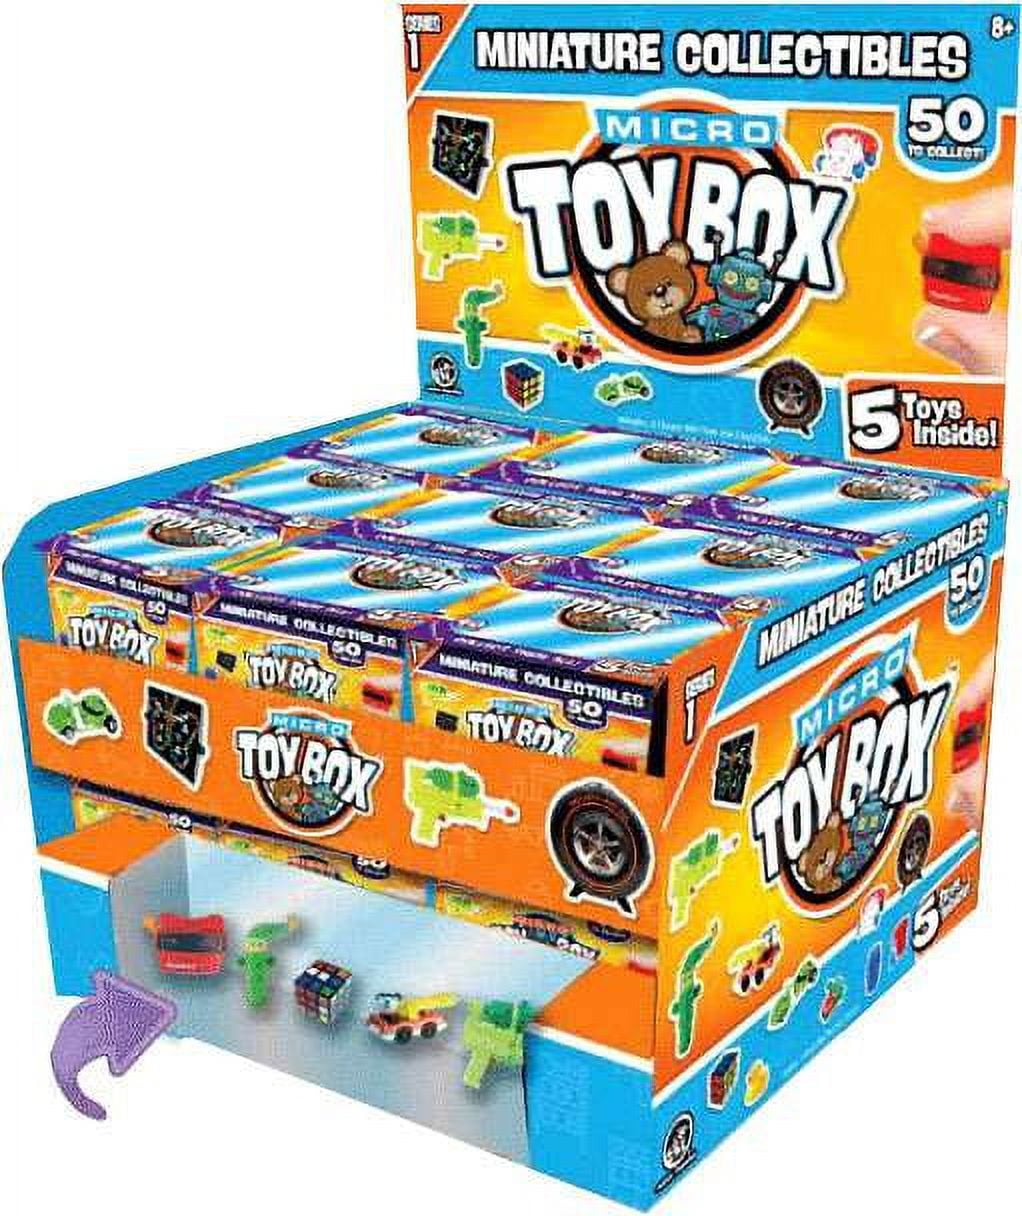 Mystery Toy Box